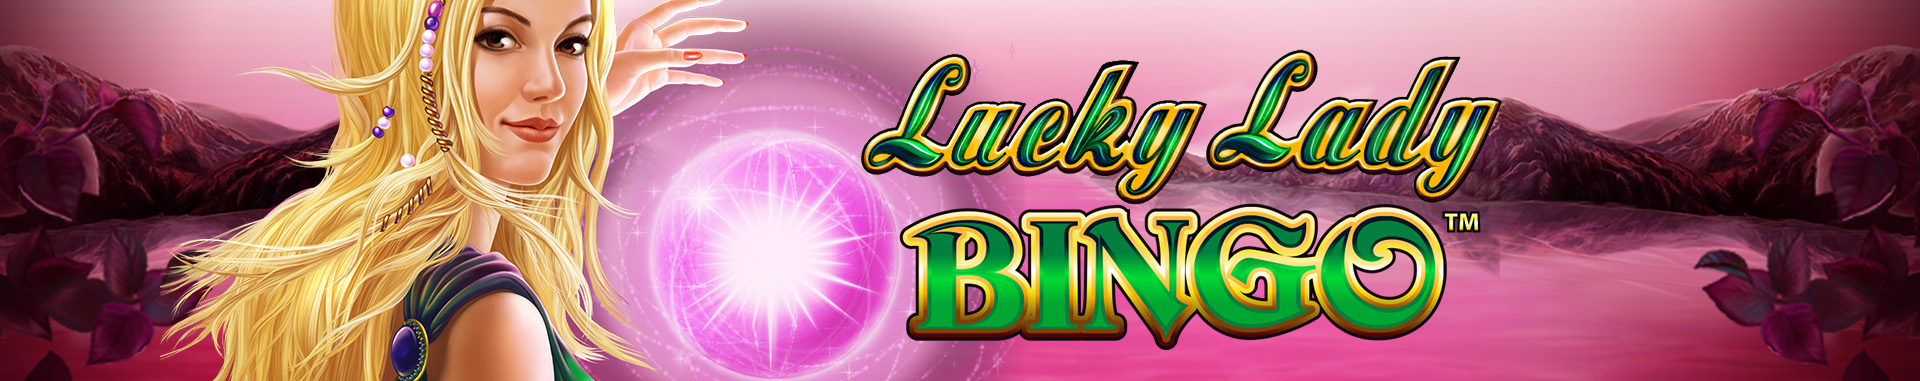 Video Bingo Lucky Lady Bingo